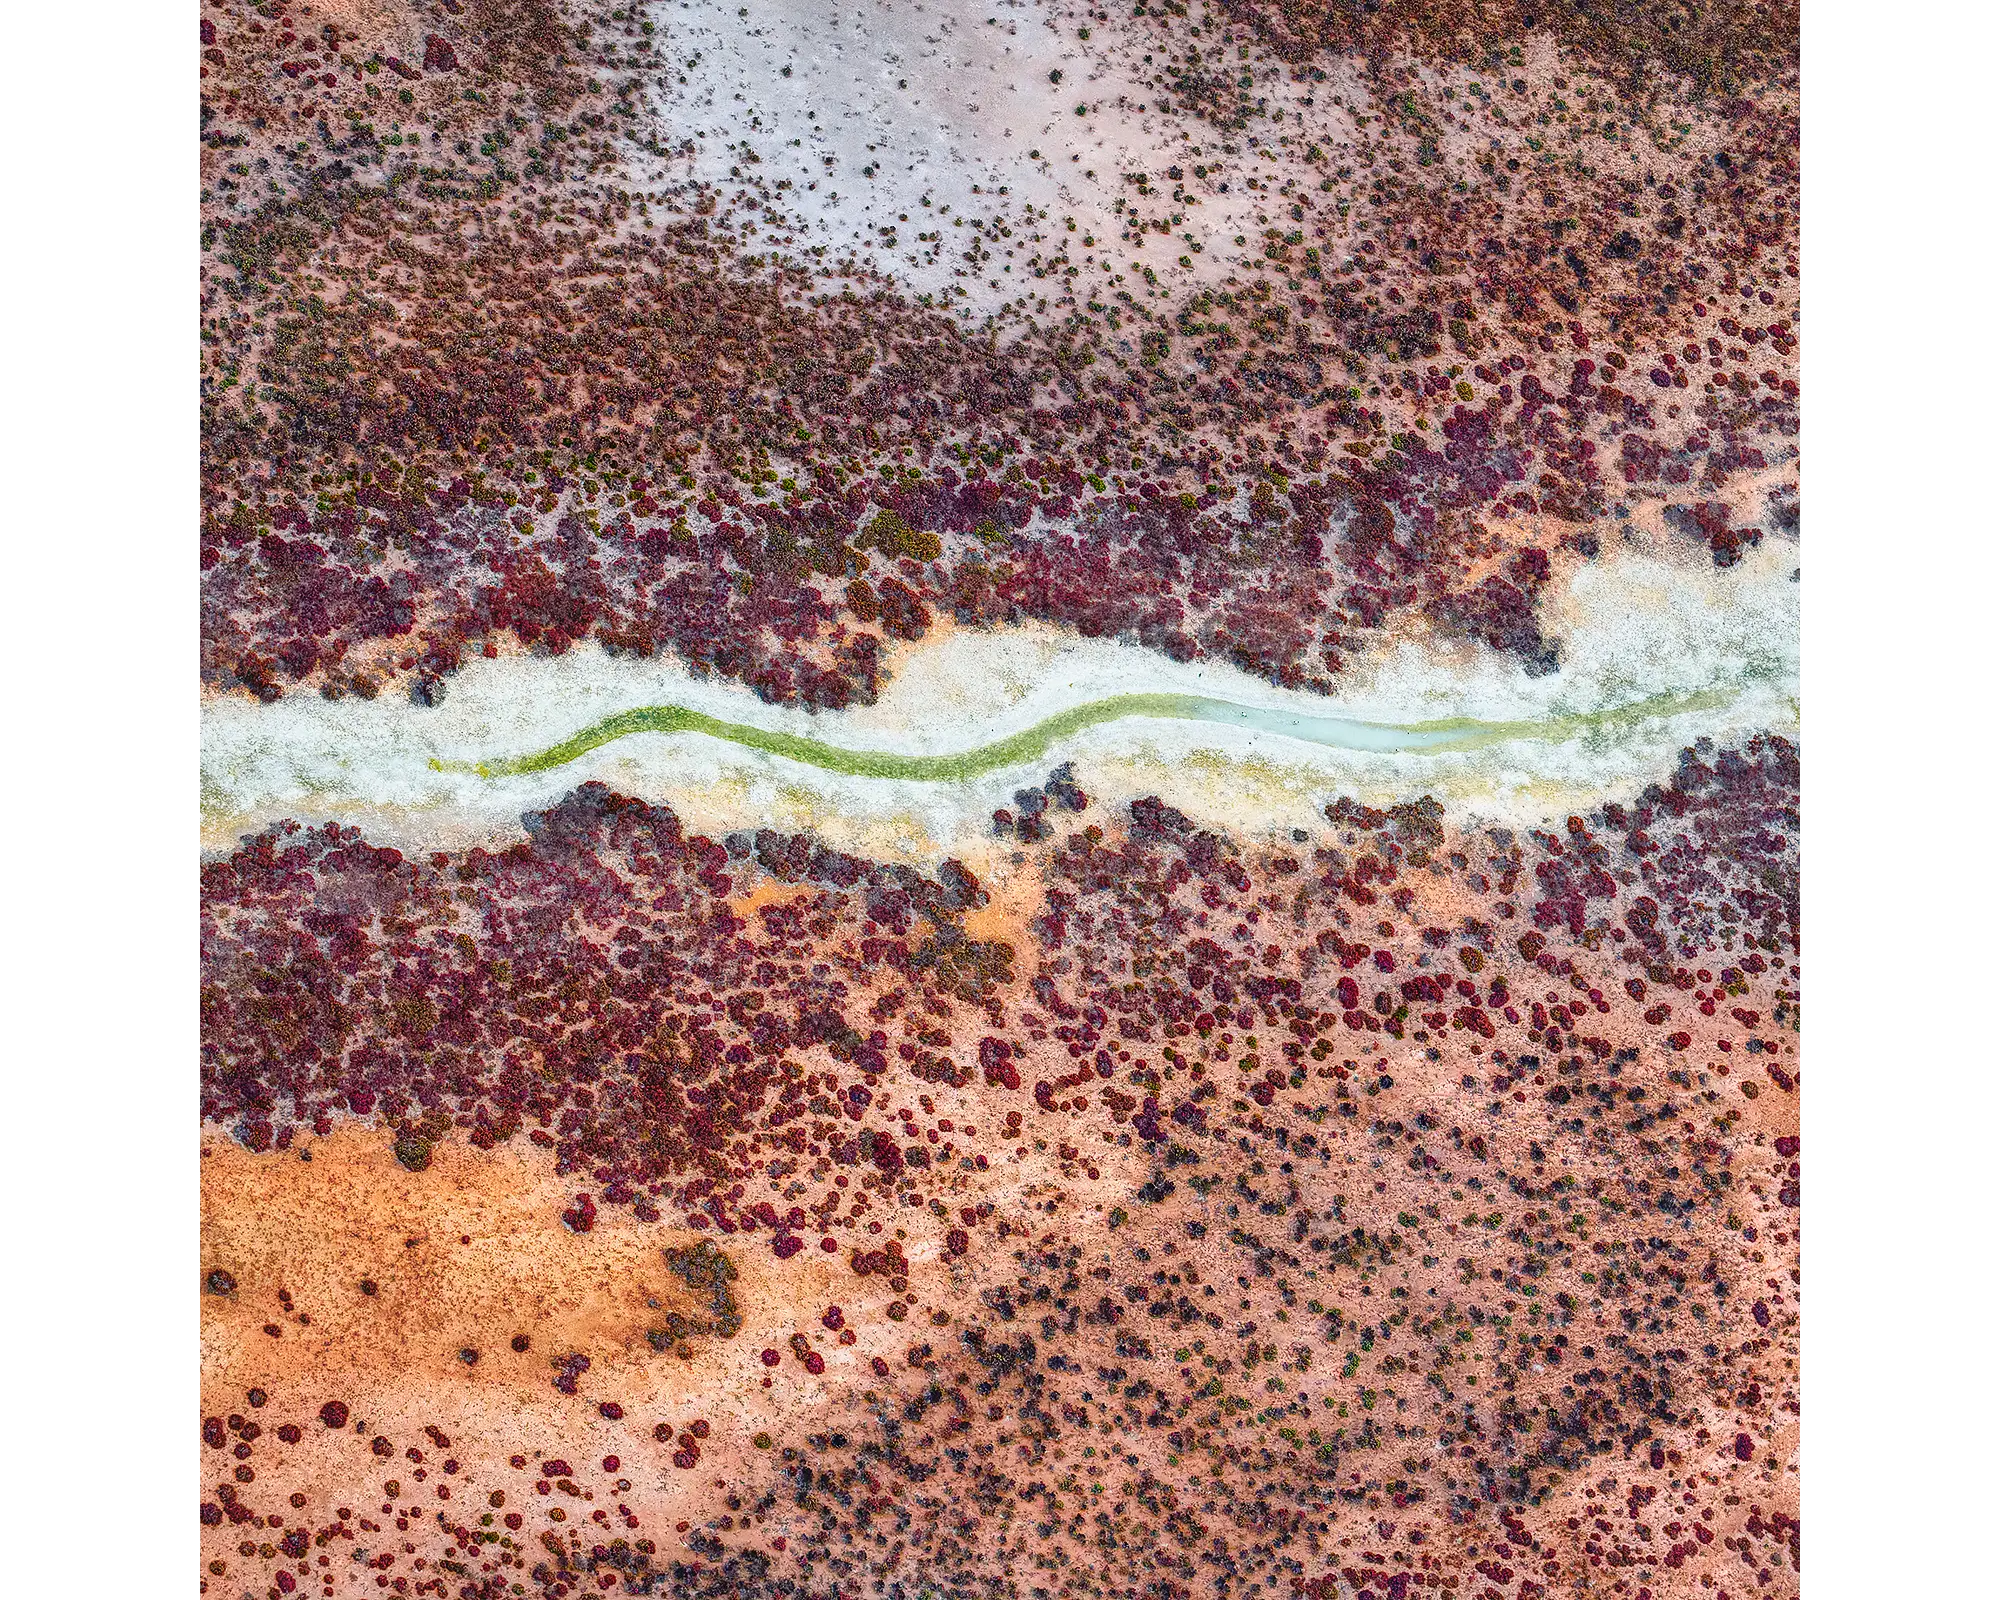 Aerial view of Roebuck Plains, The Kimberley, Western Australia.